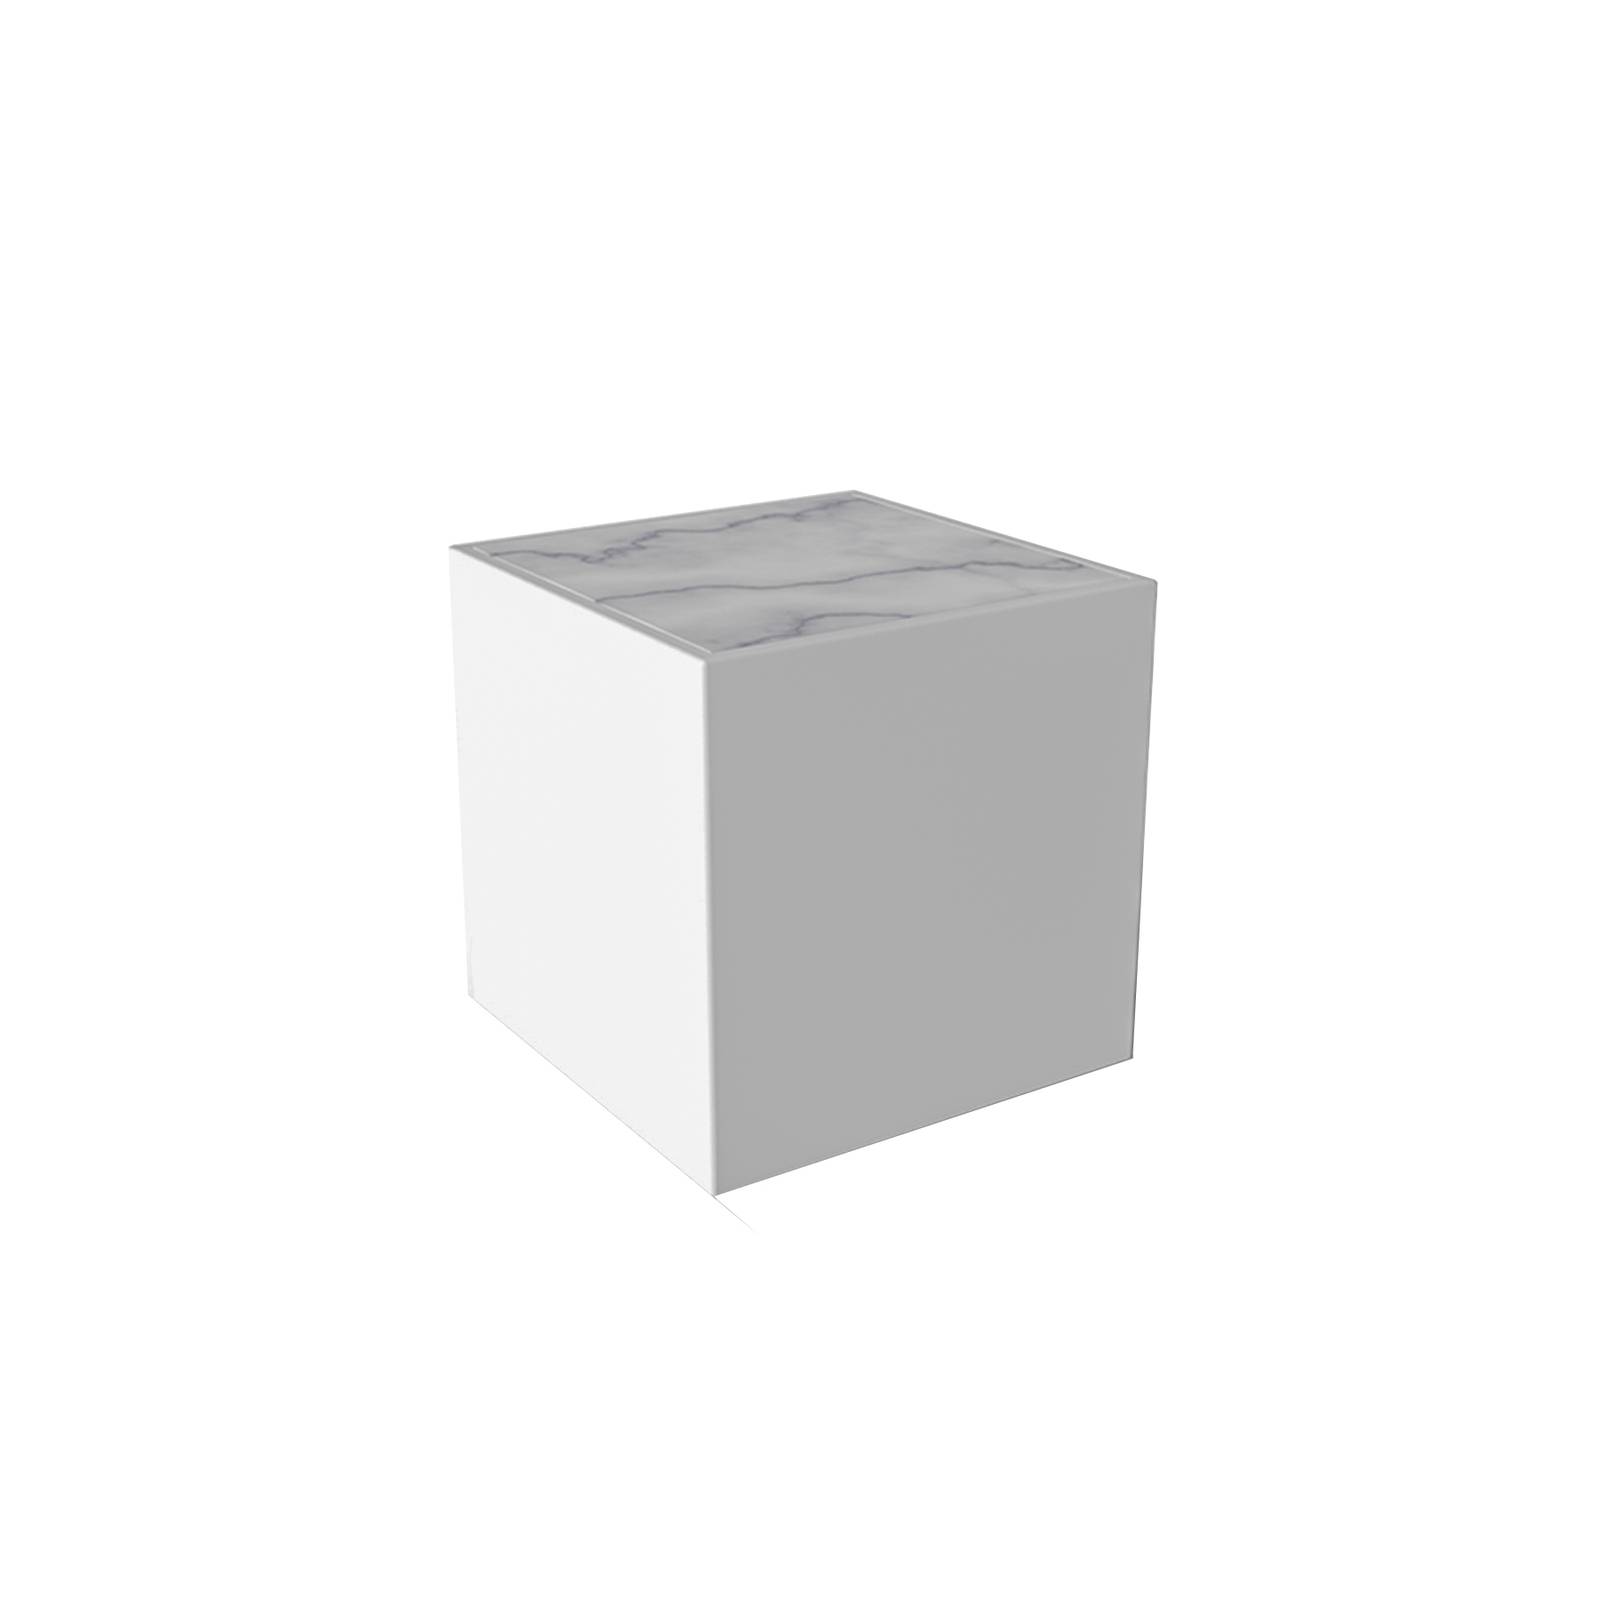 Image of Newgarden Bora table avec plateau marbre 8435578503714